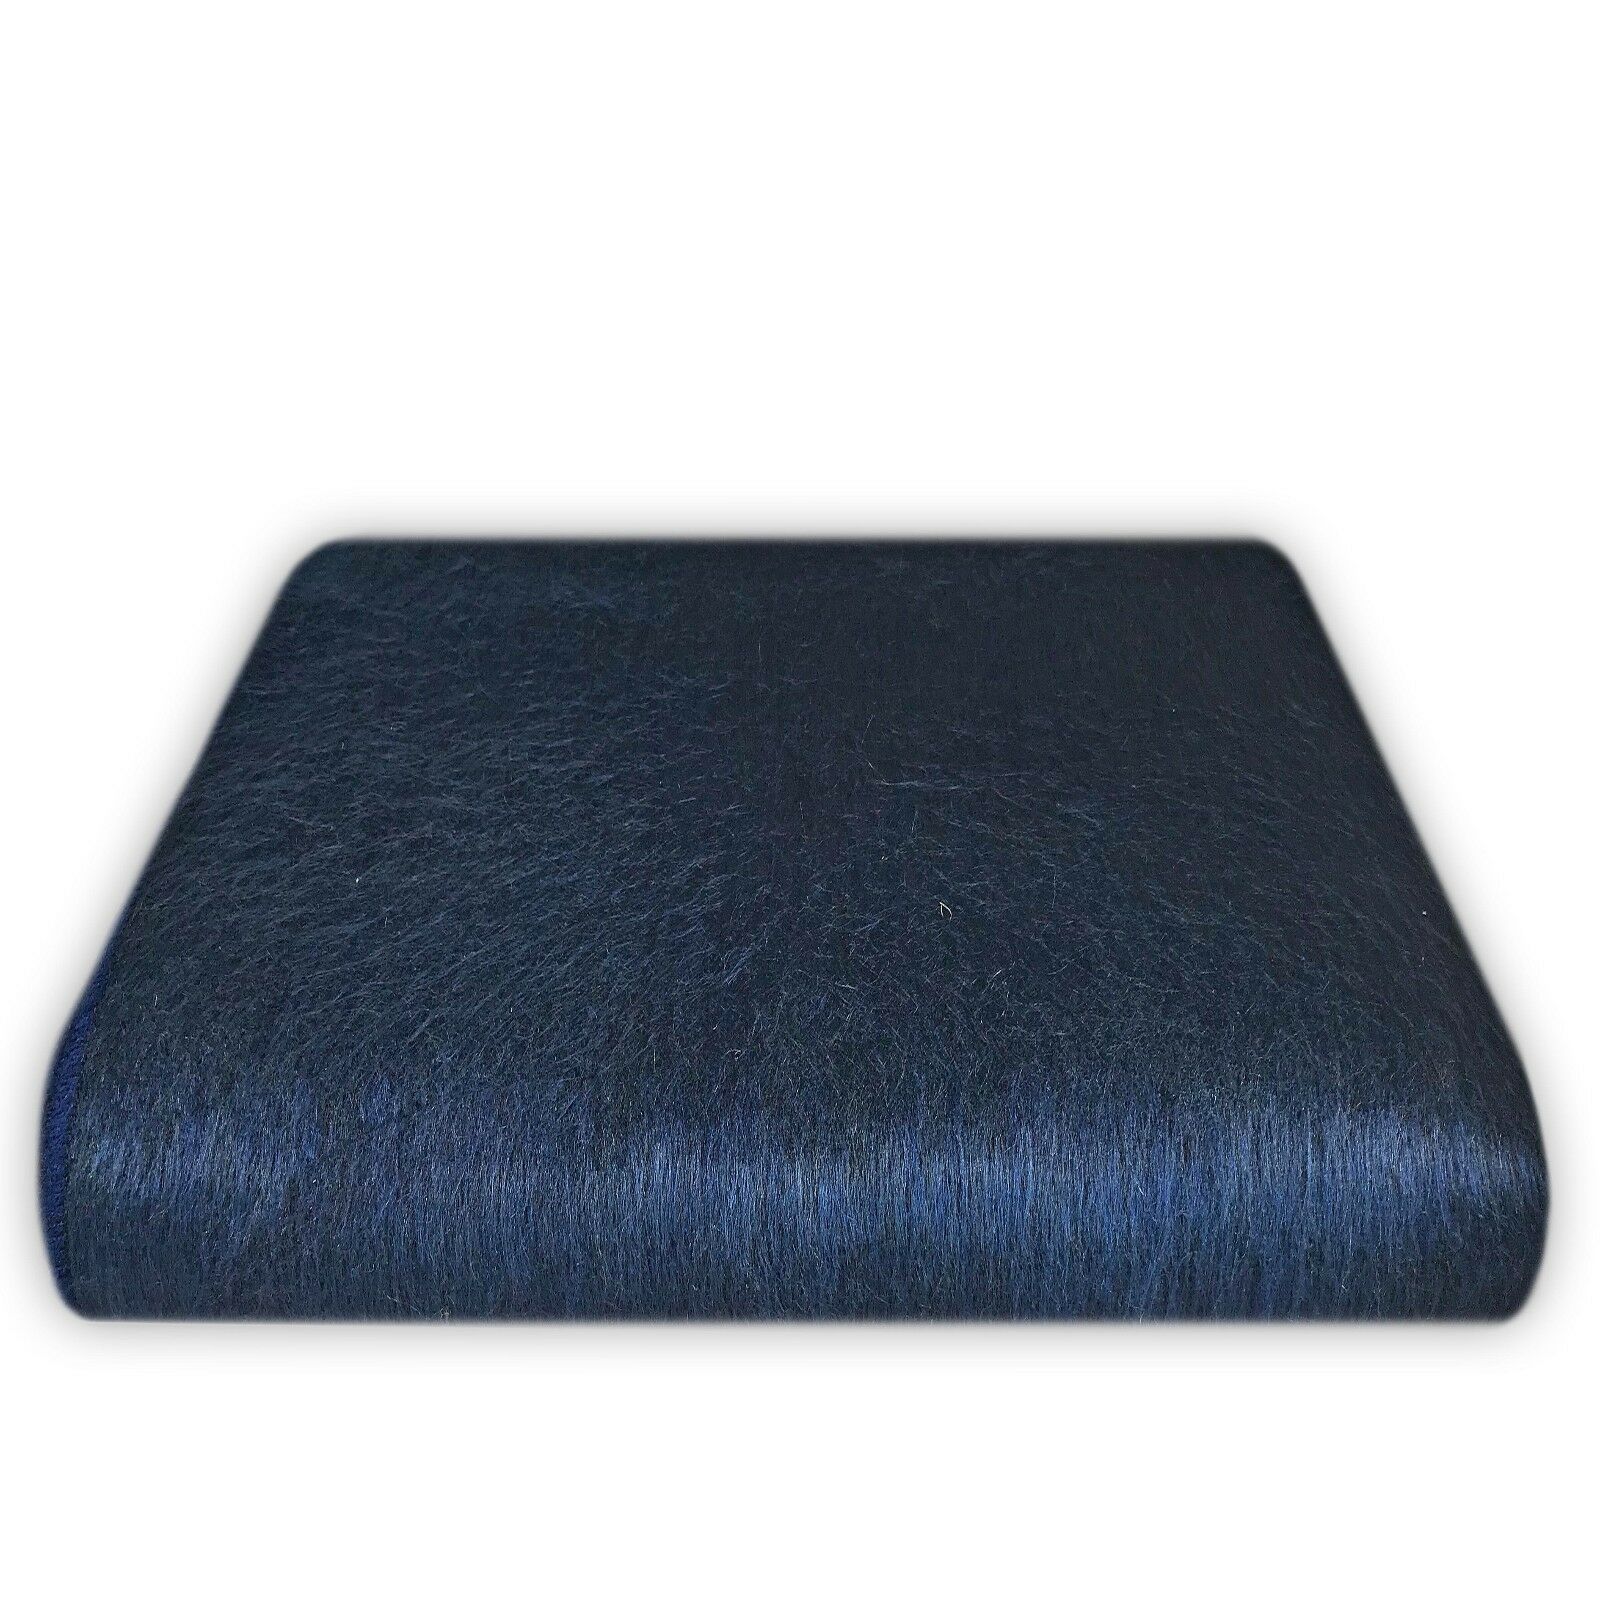 Alpamalag - Baby Alpaca Wool Throw Blanket / Sofa Cover - Queen 95" x 67" - Solid Deep Blue Pattern